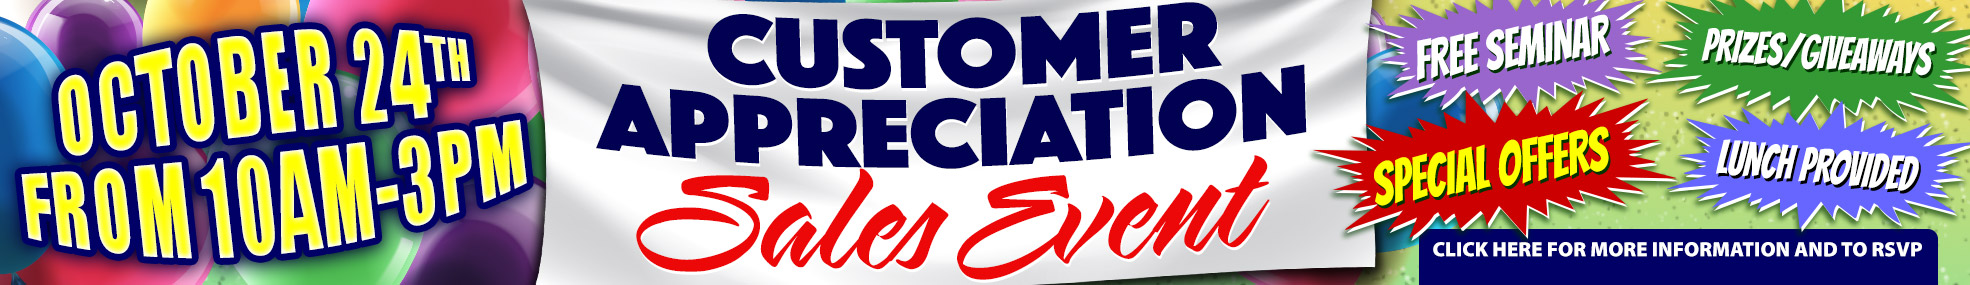 Customer Appreciation Sales Event